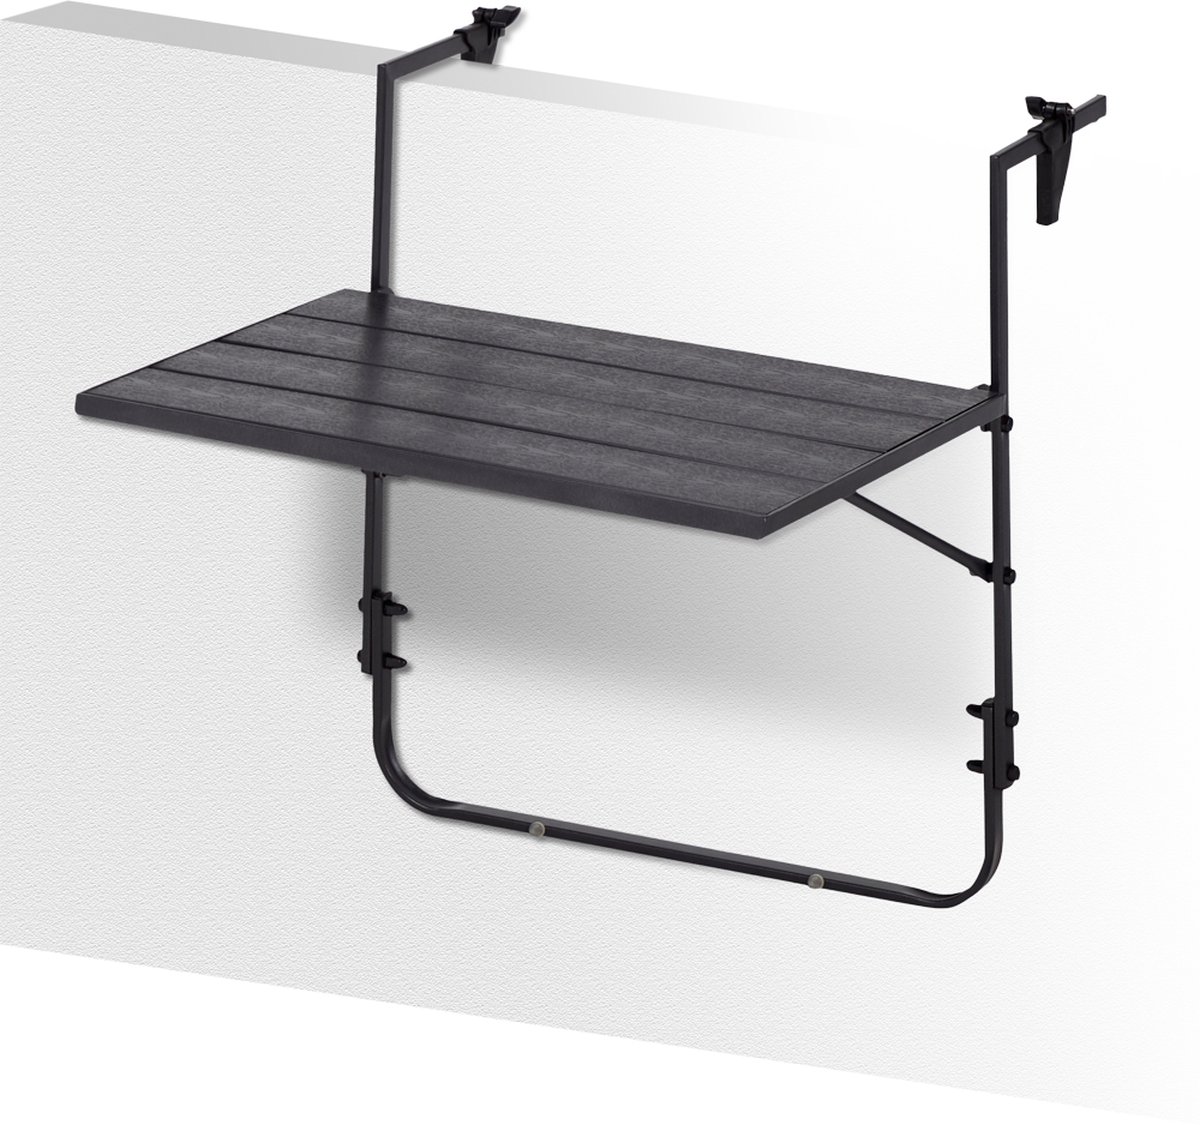 Lisomme Jolien balkontafel polywood zwart - inklapbaar - kunsstof - hout look - metaal